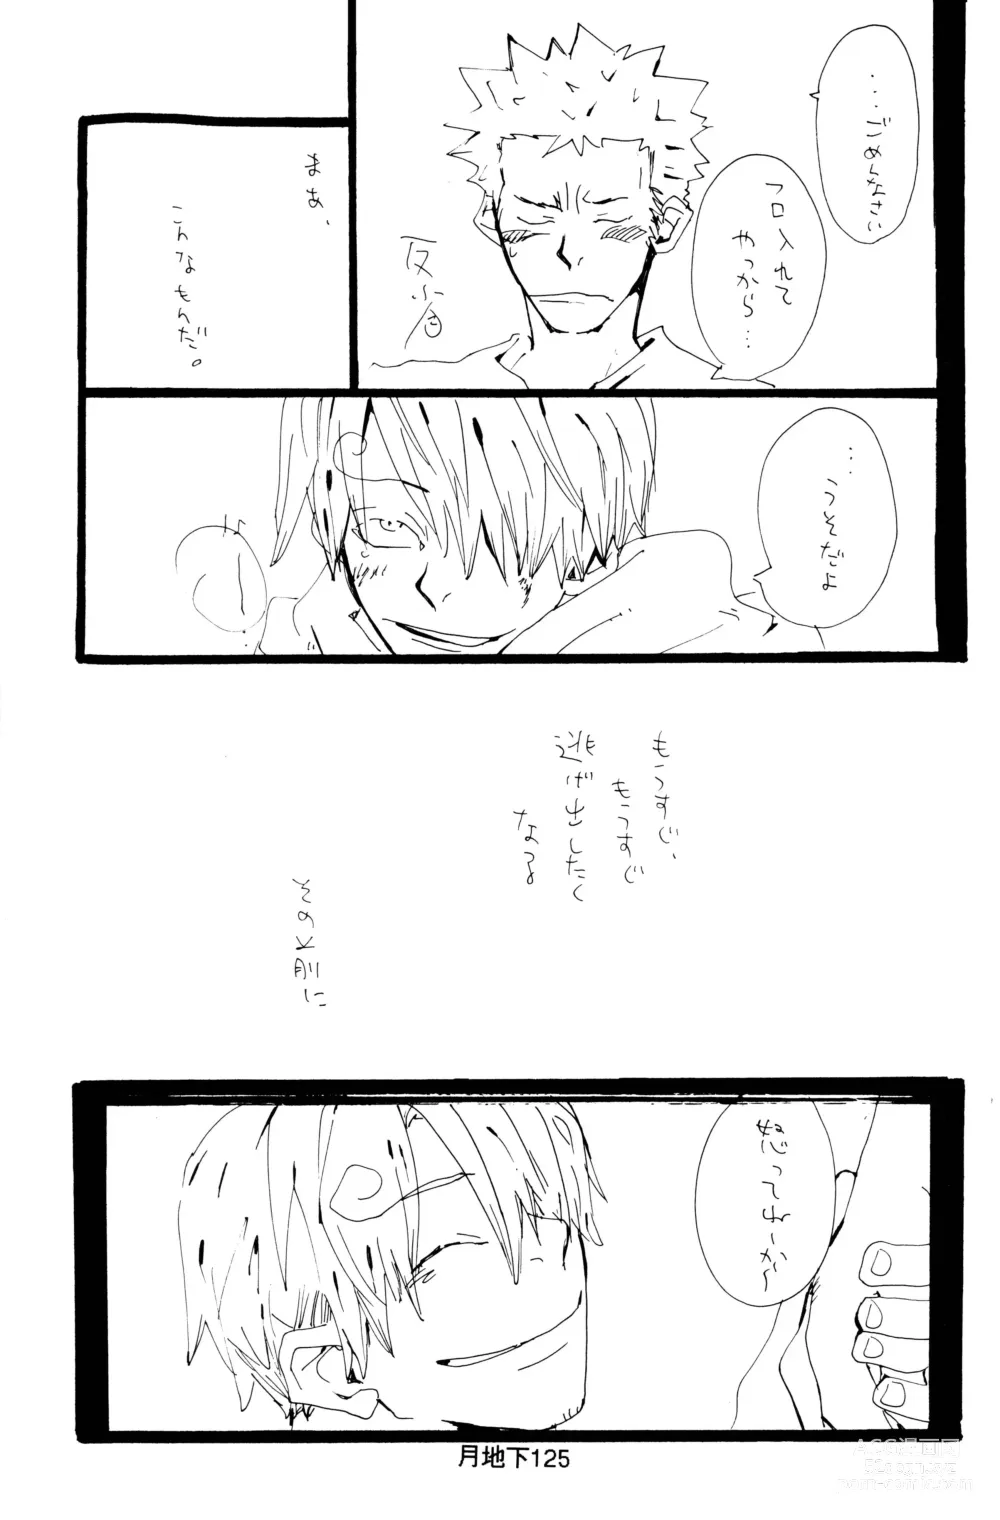 Page 53 of doujinshi Bara no Hana